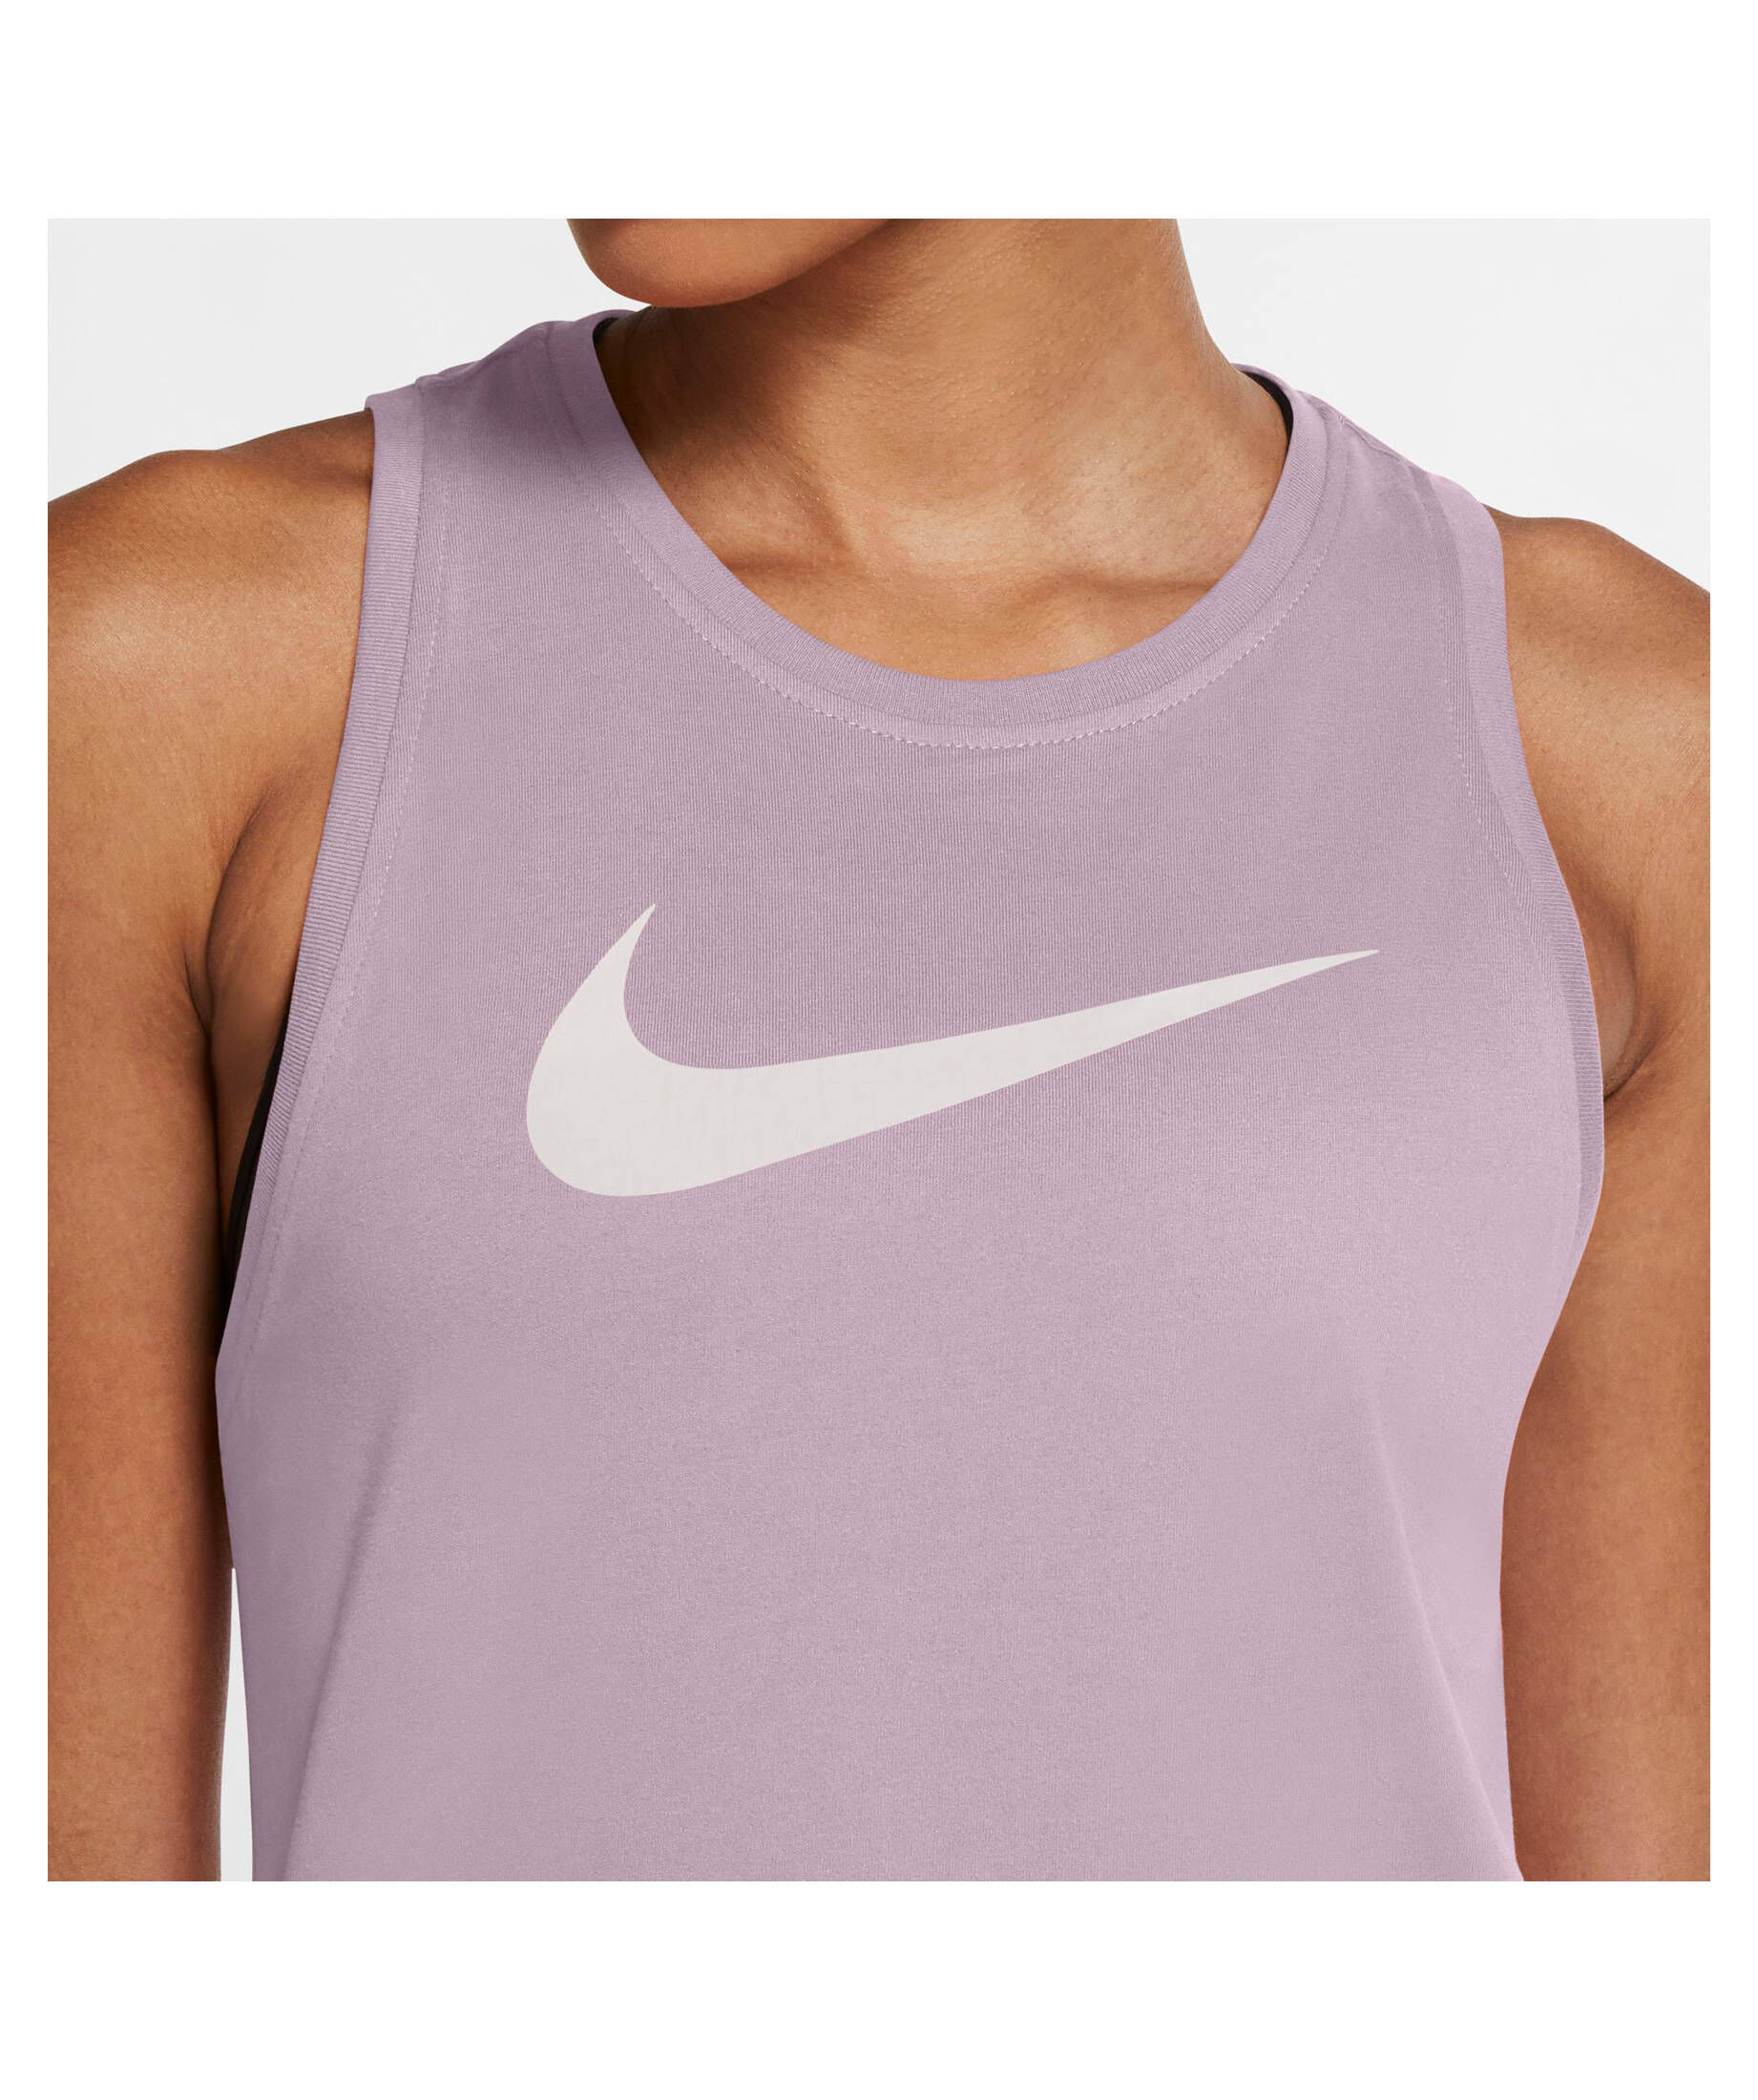 Nike Damen kaufen | engelhorn